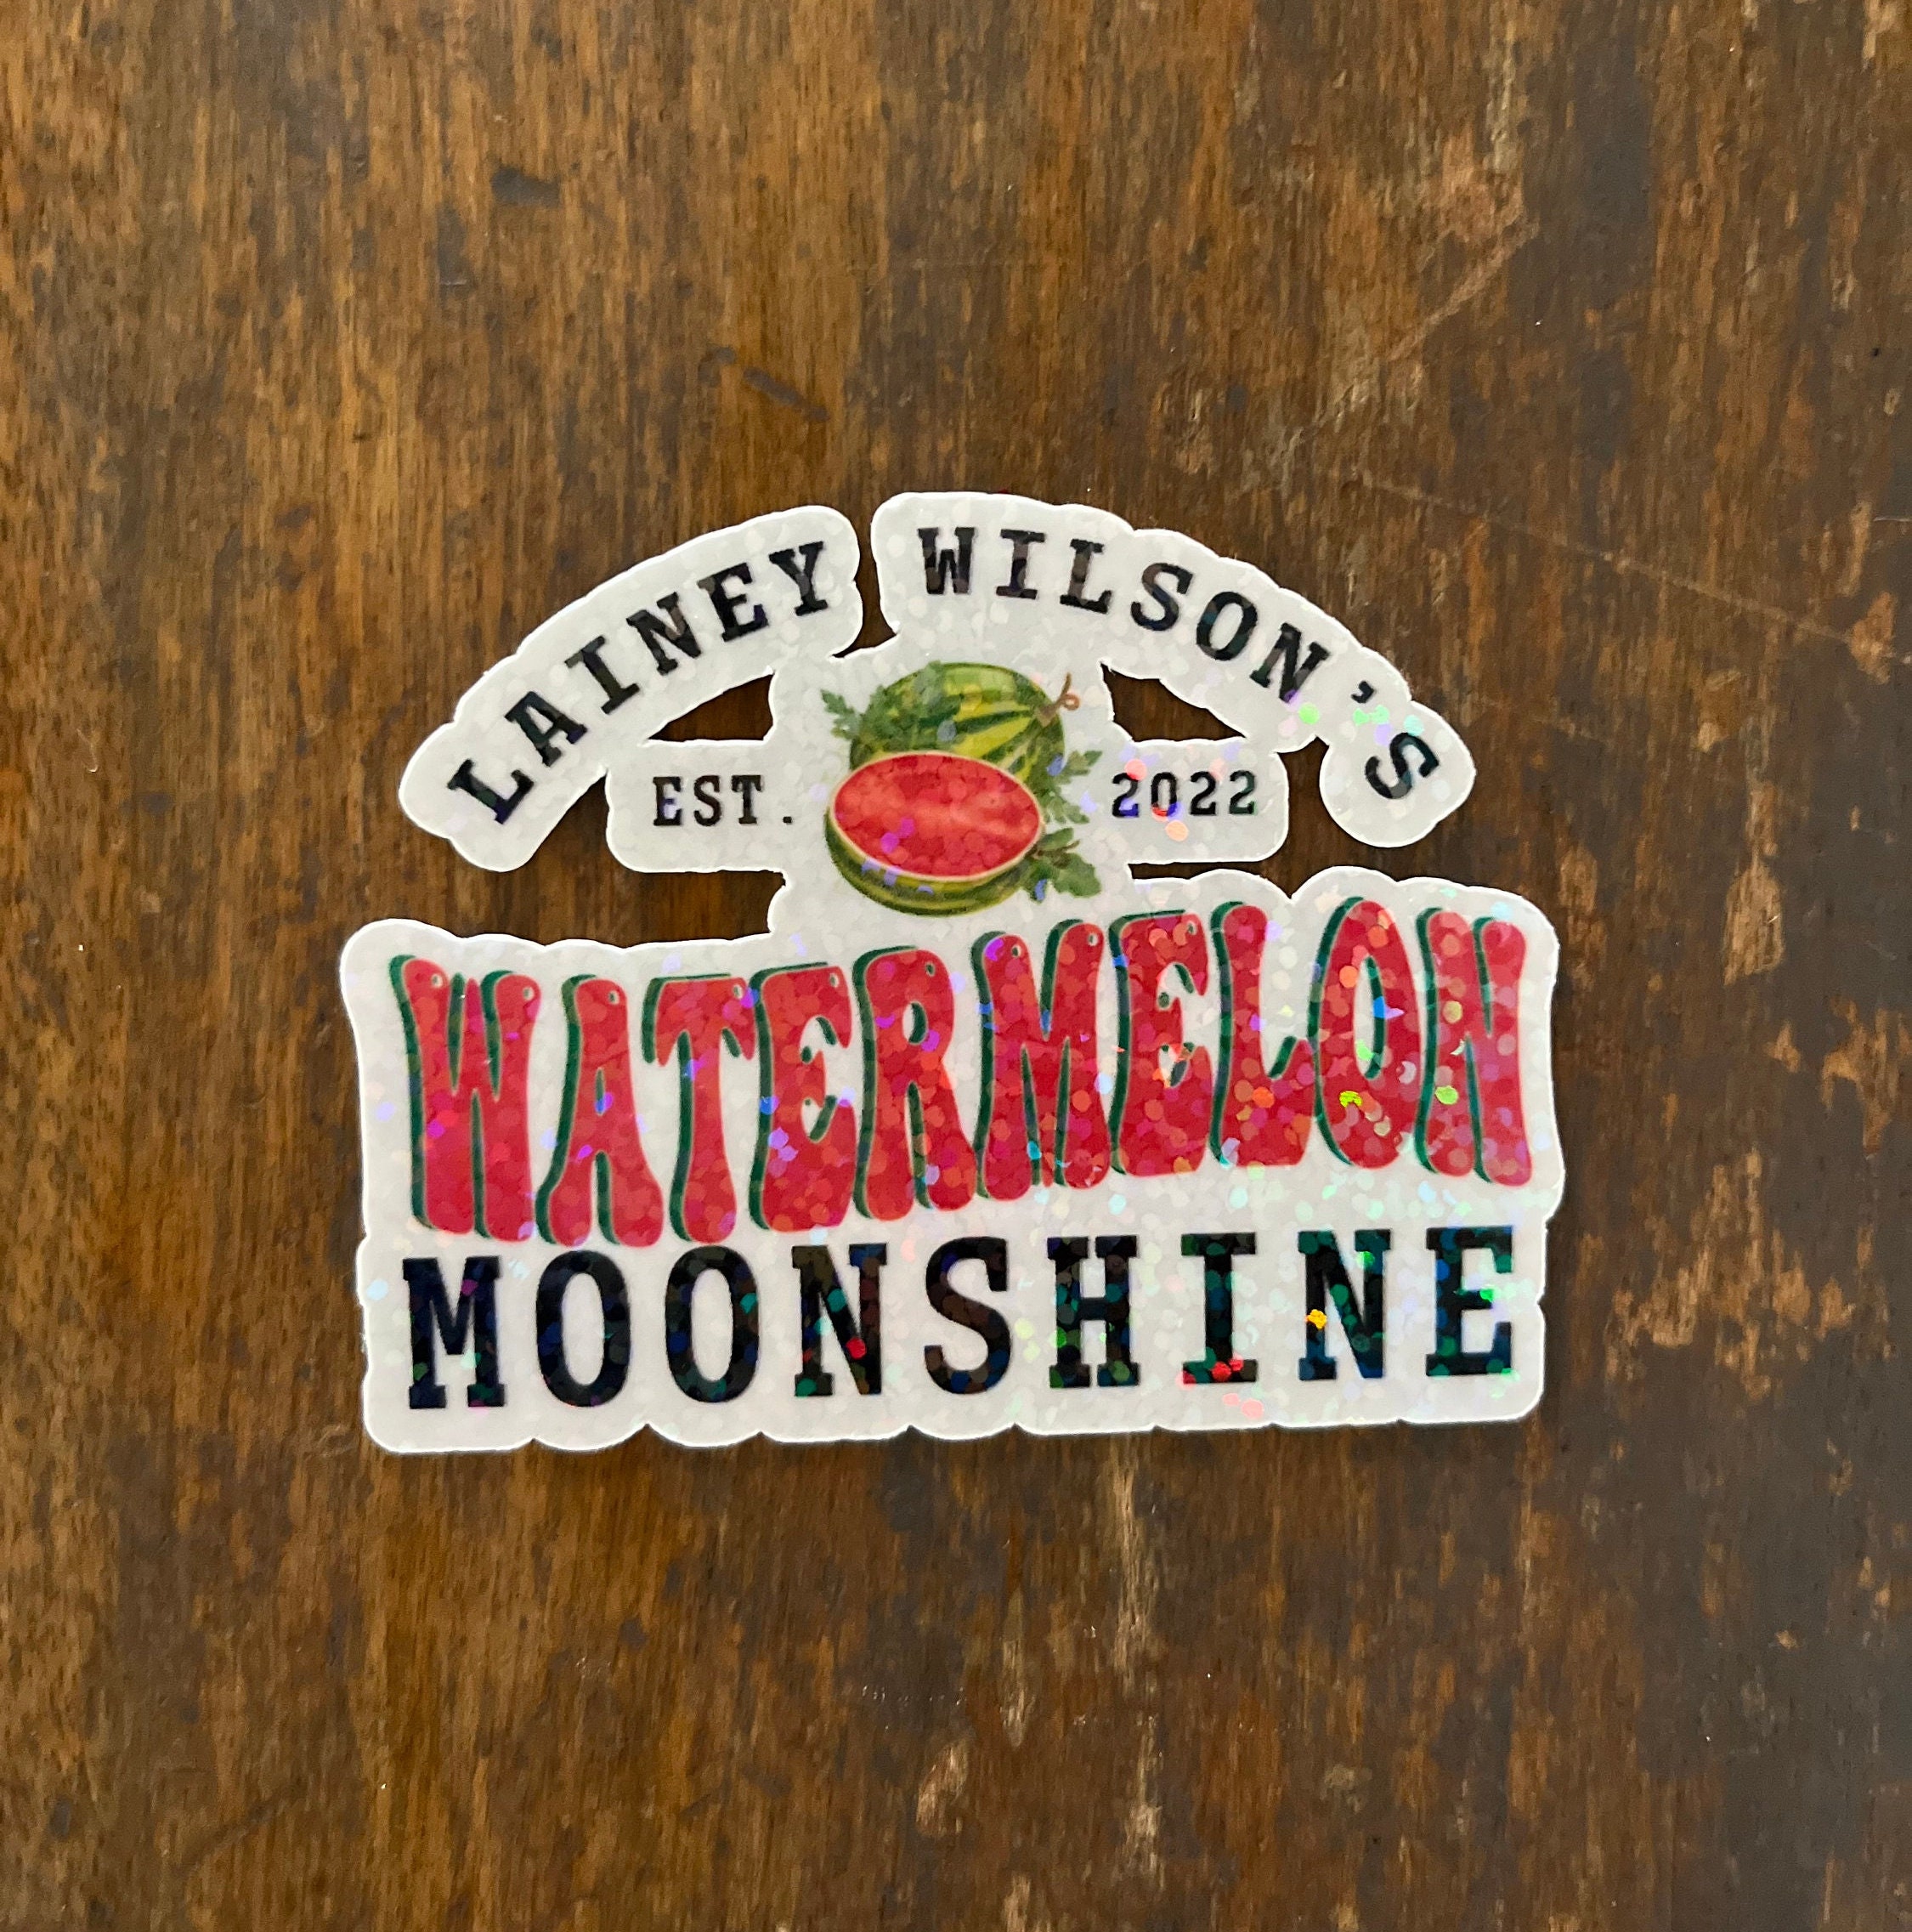 Learn how to make @laineywilsonmusic's signature Watermelon Moonshine